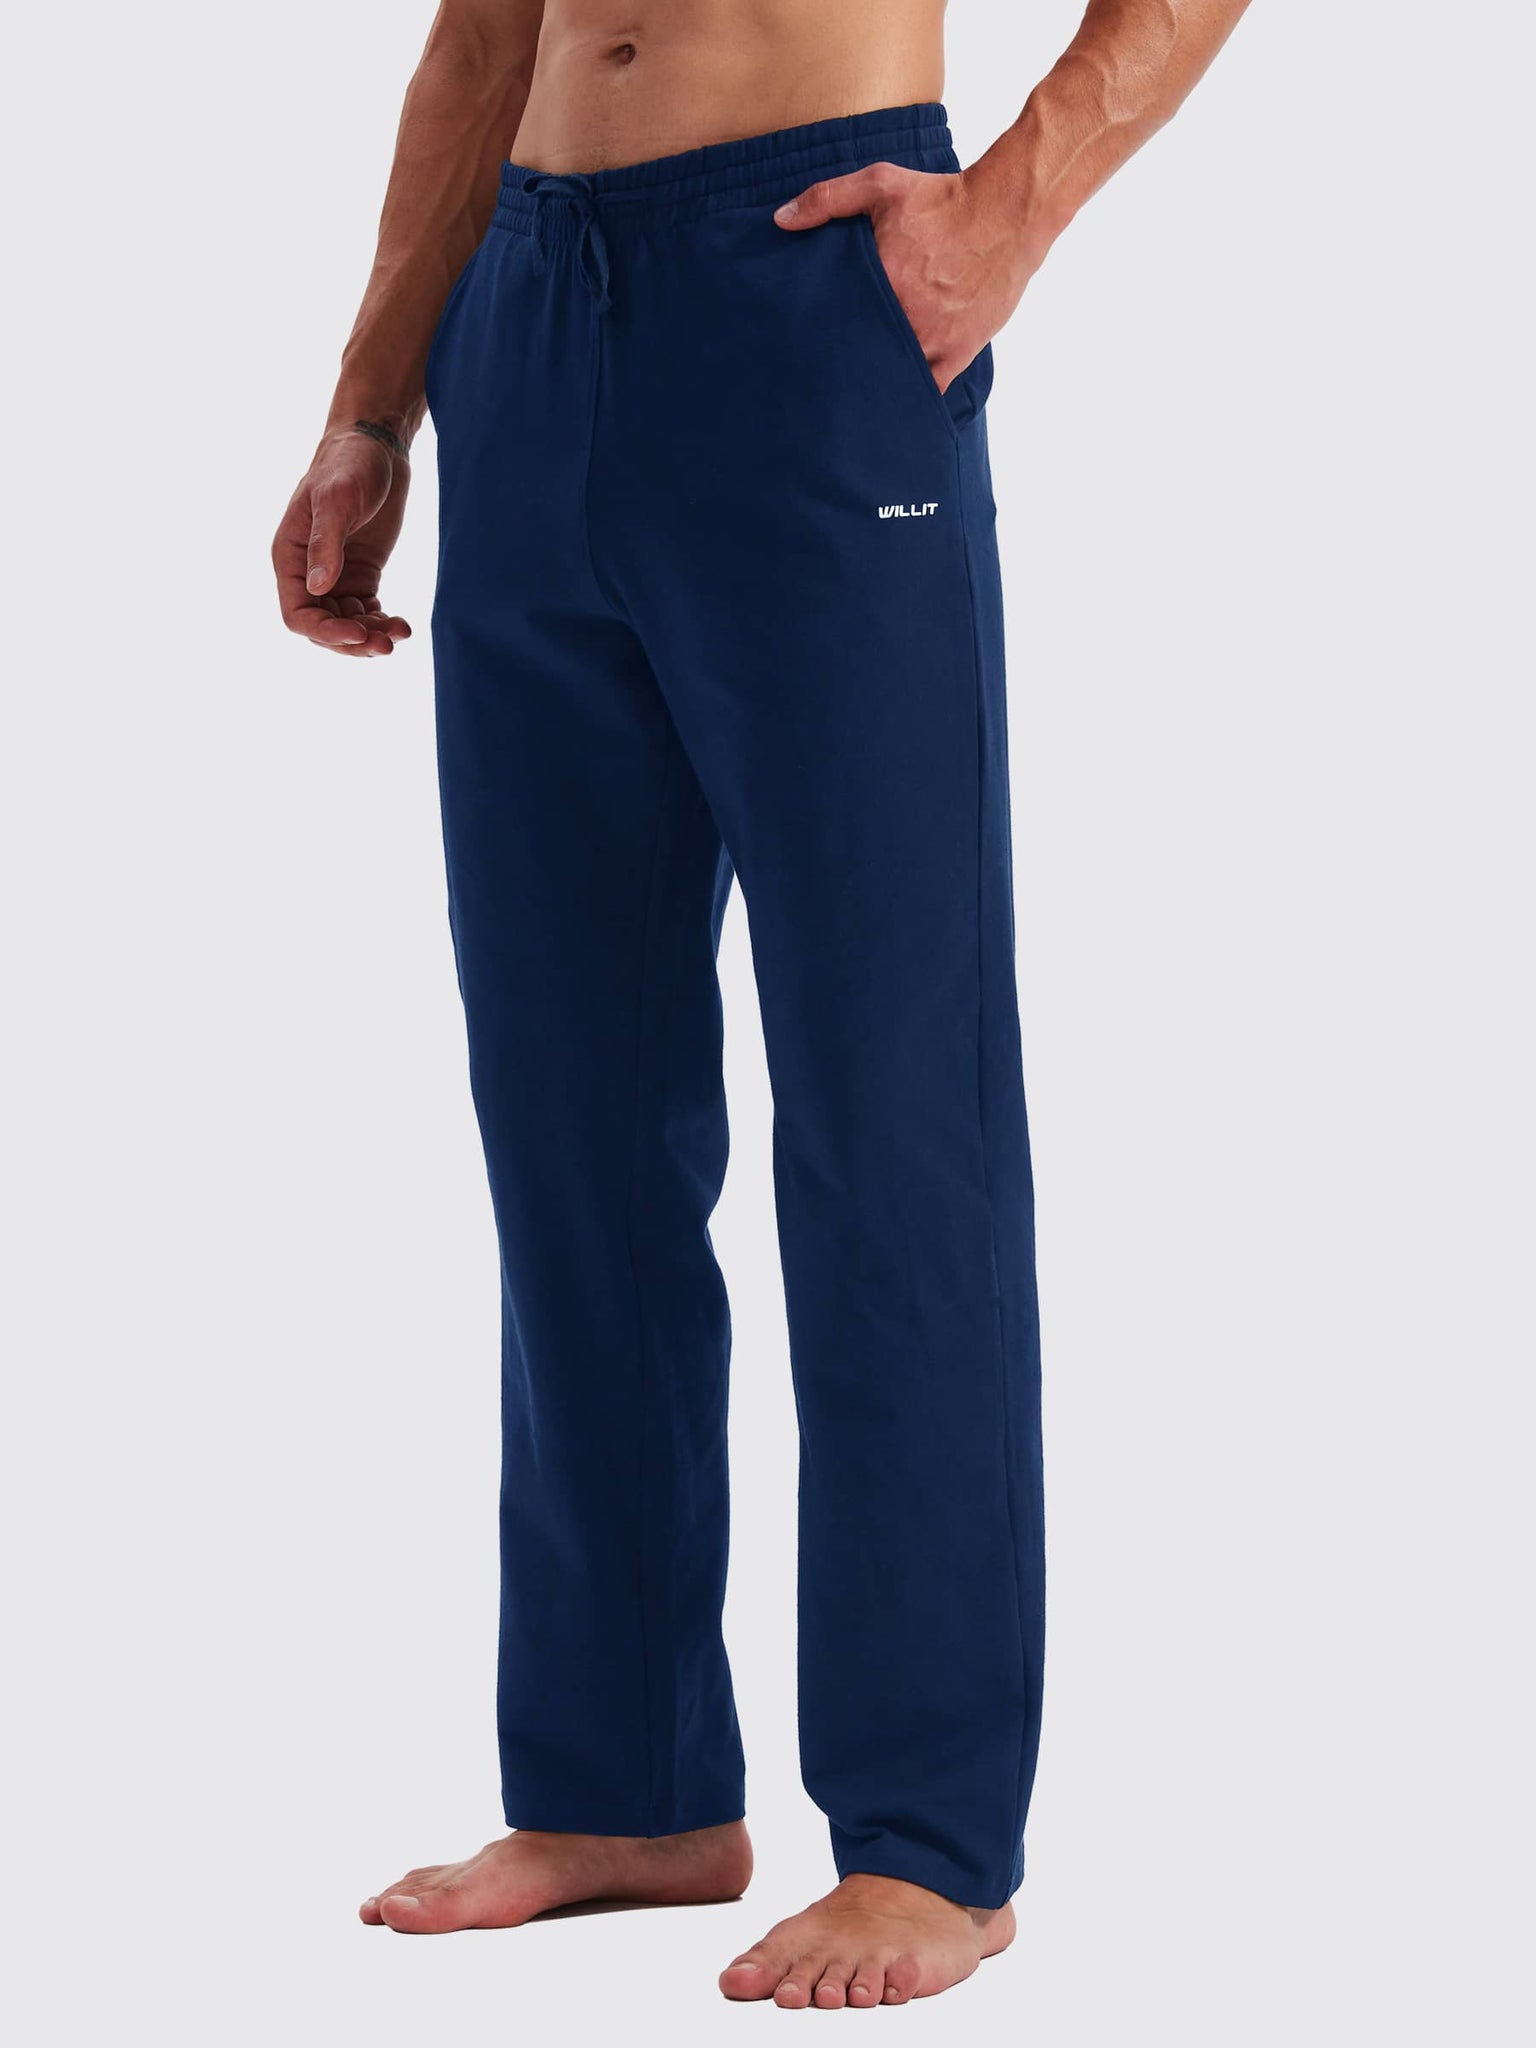 Men's Cotton Yoga Balance Sweatpants_Navy_model5